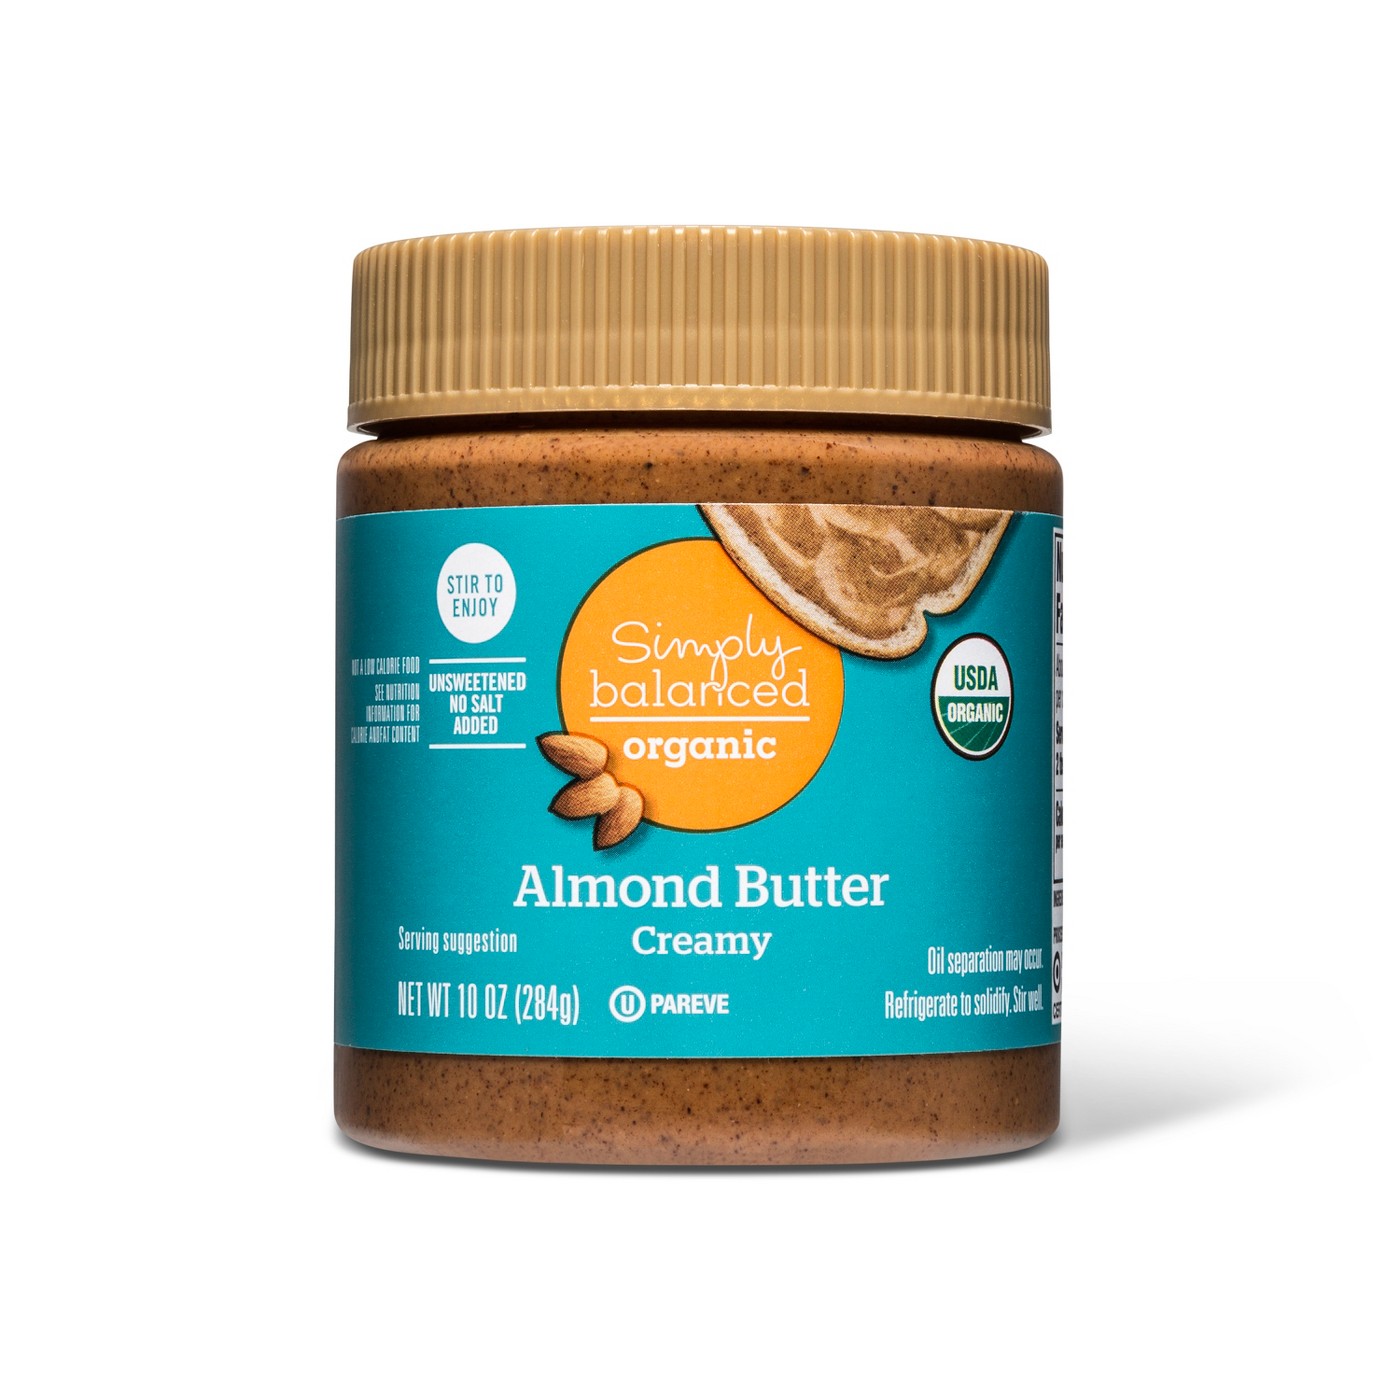 Simply balanced Almond Butter